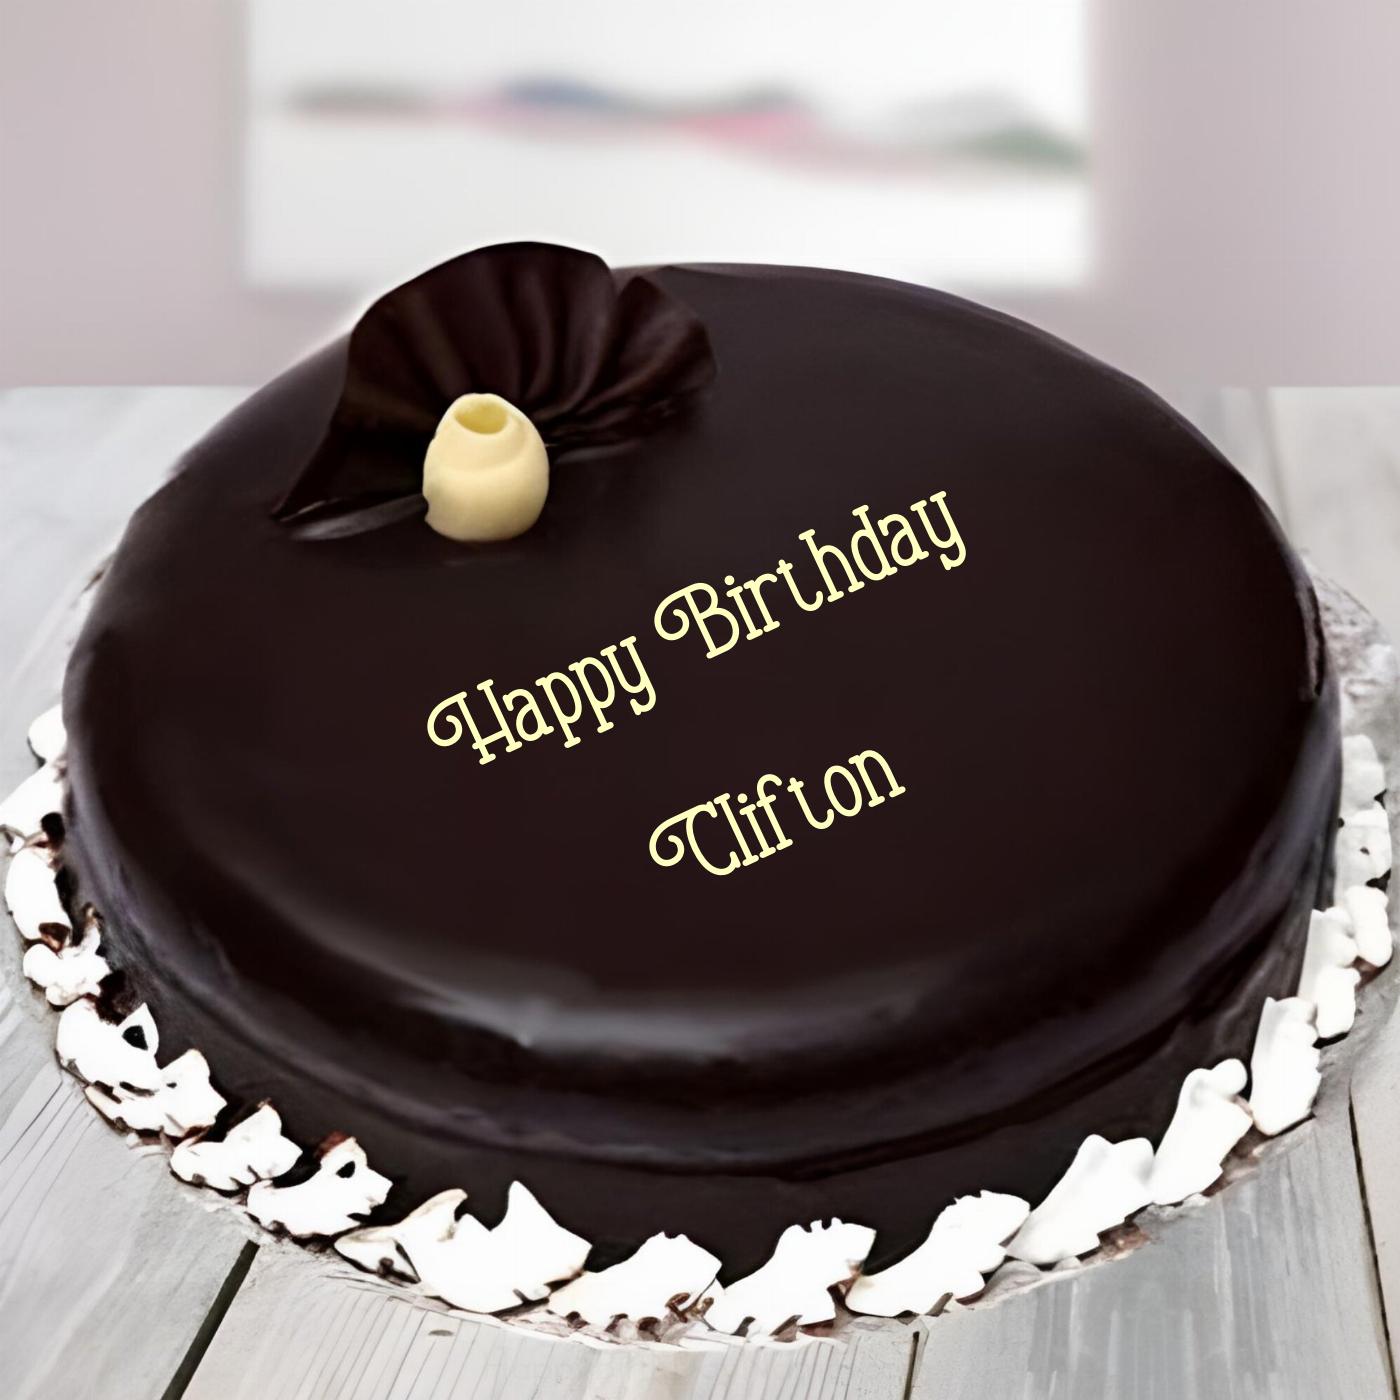 Happy Birthday Clifton Beautiful Chocolate Cake